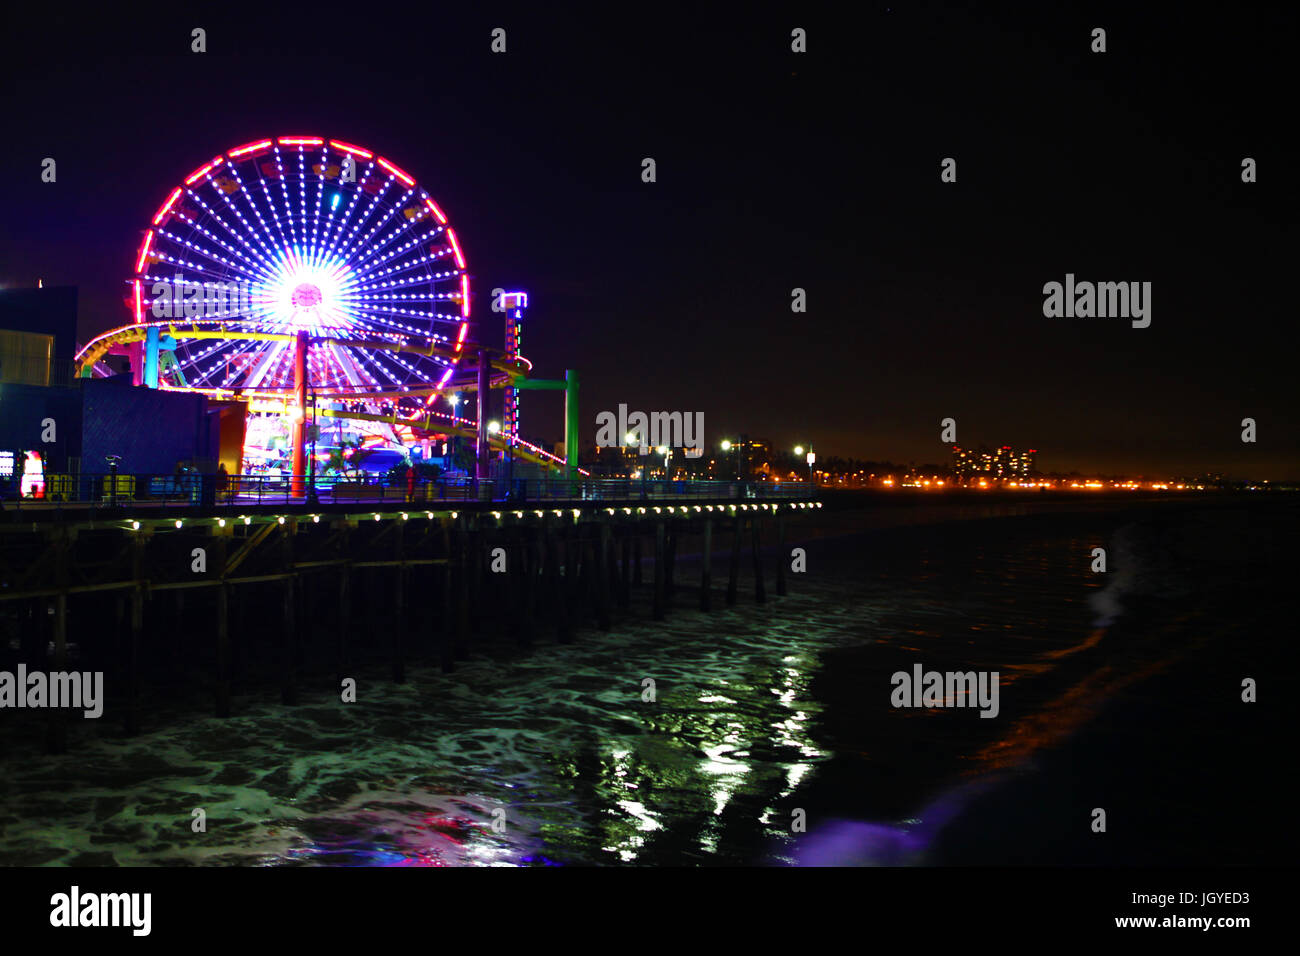 The Santa Monica Pier at Night, California Stock Photo Alamy